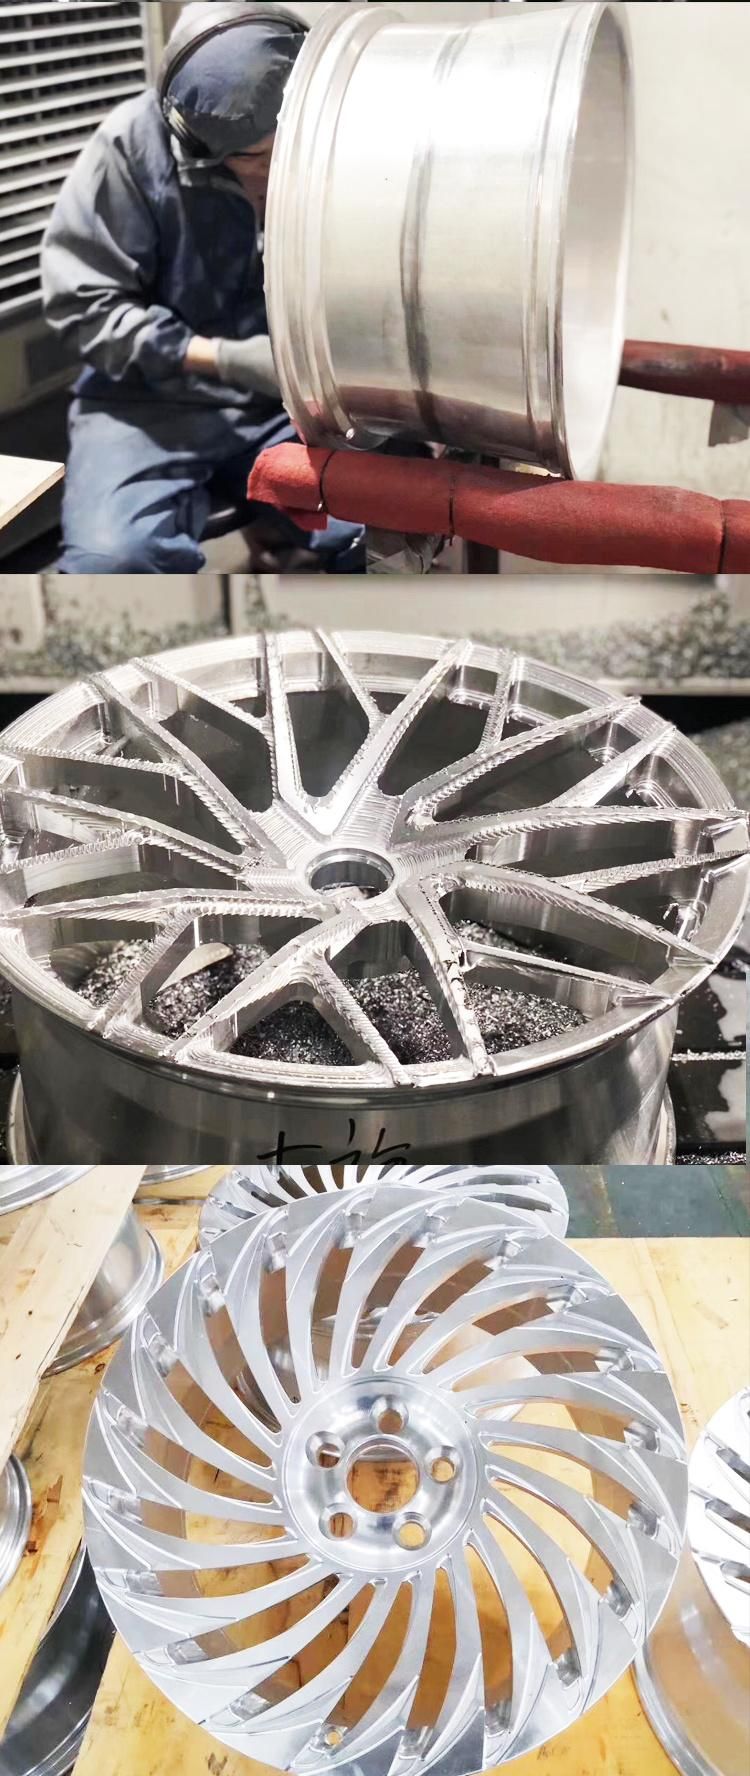   Alloy Rims Sport Aluminum Wheels for Customized Mags Rims Alloy Wheels Rims Wheels Forged Aluminum with Matt Black